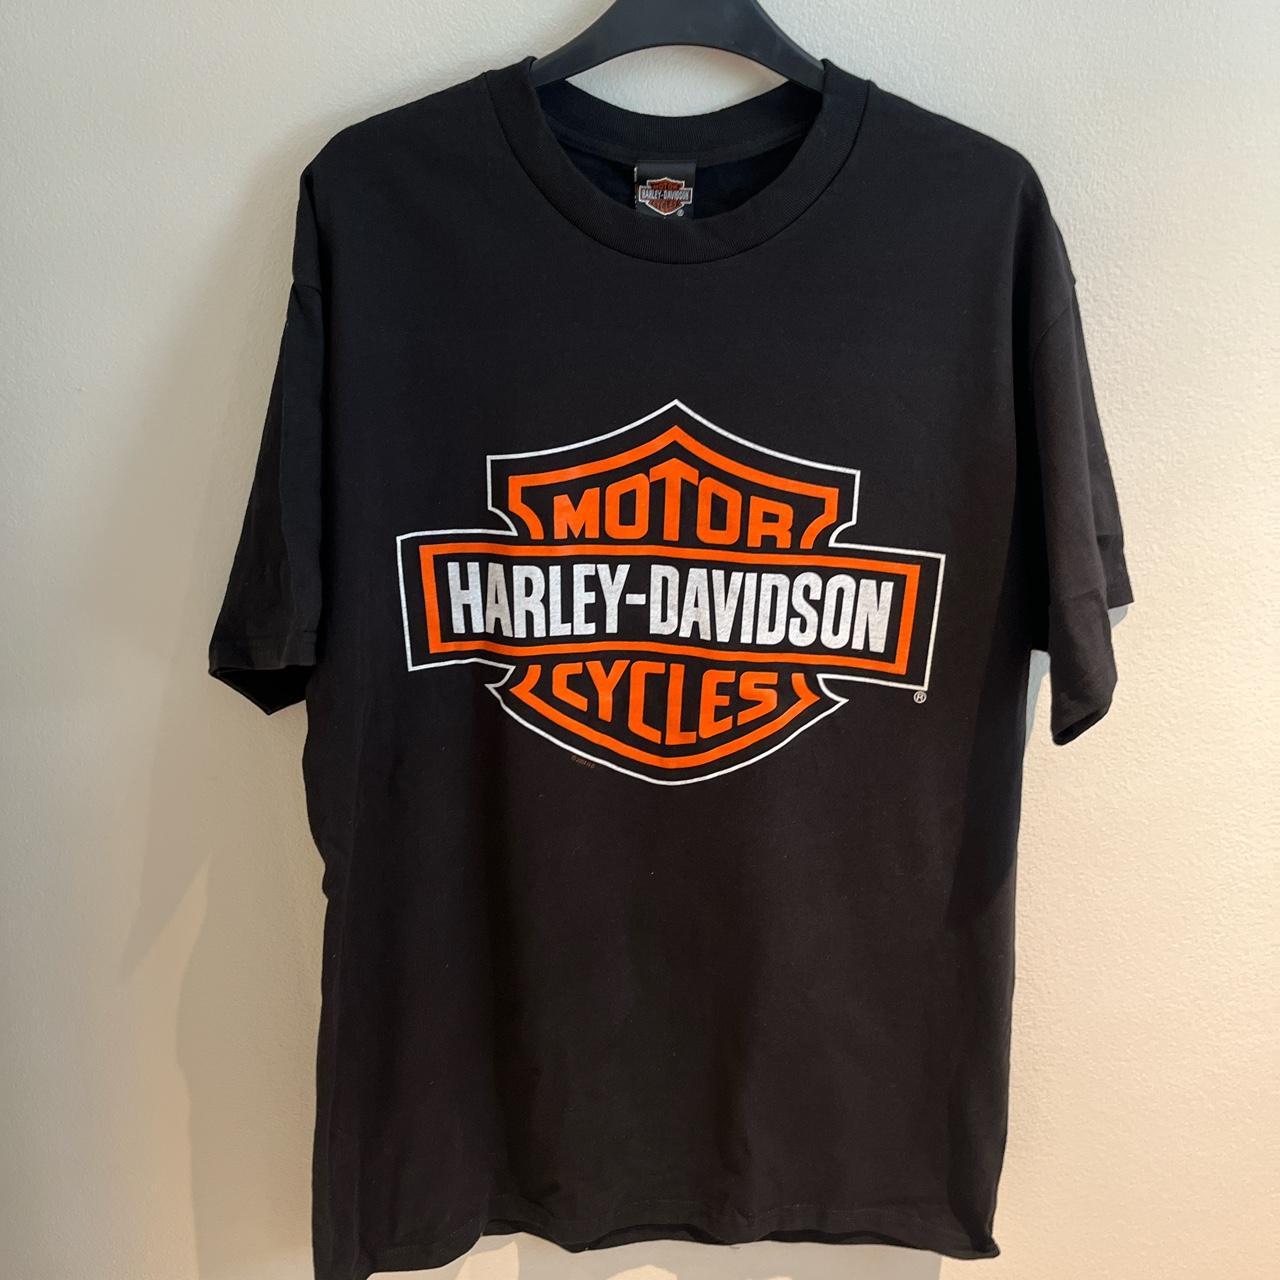 Harley Davidson classic orange logo t shirt - Depop